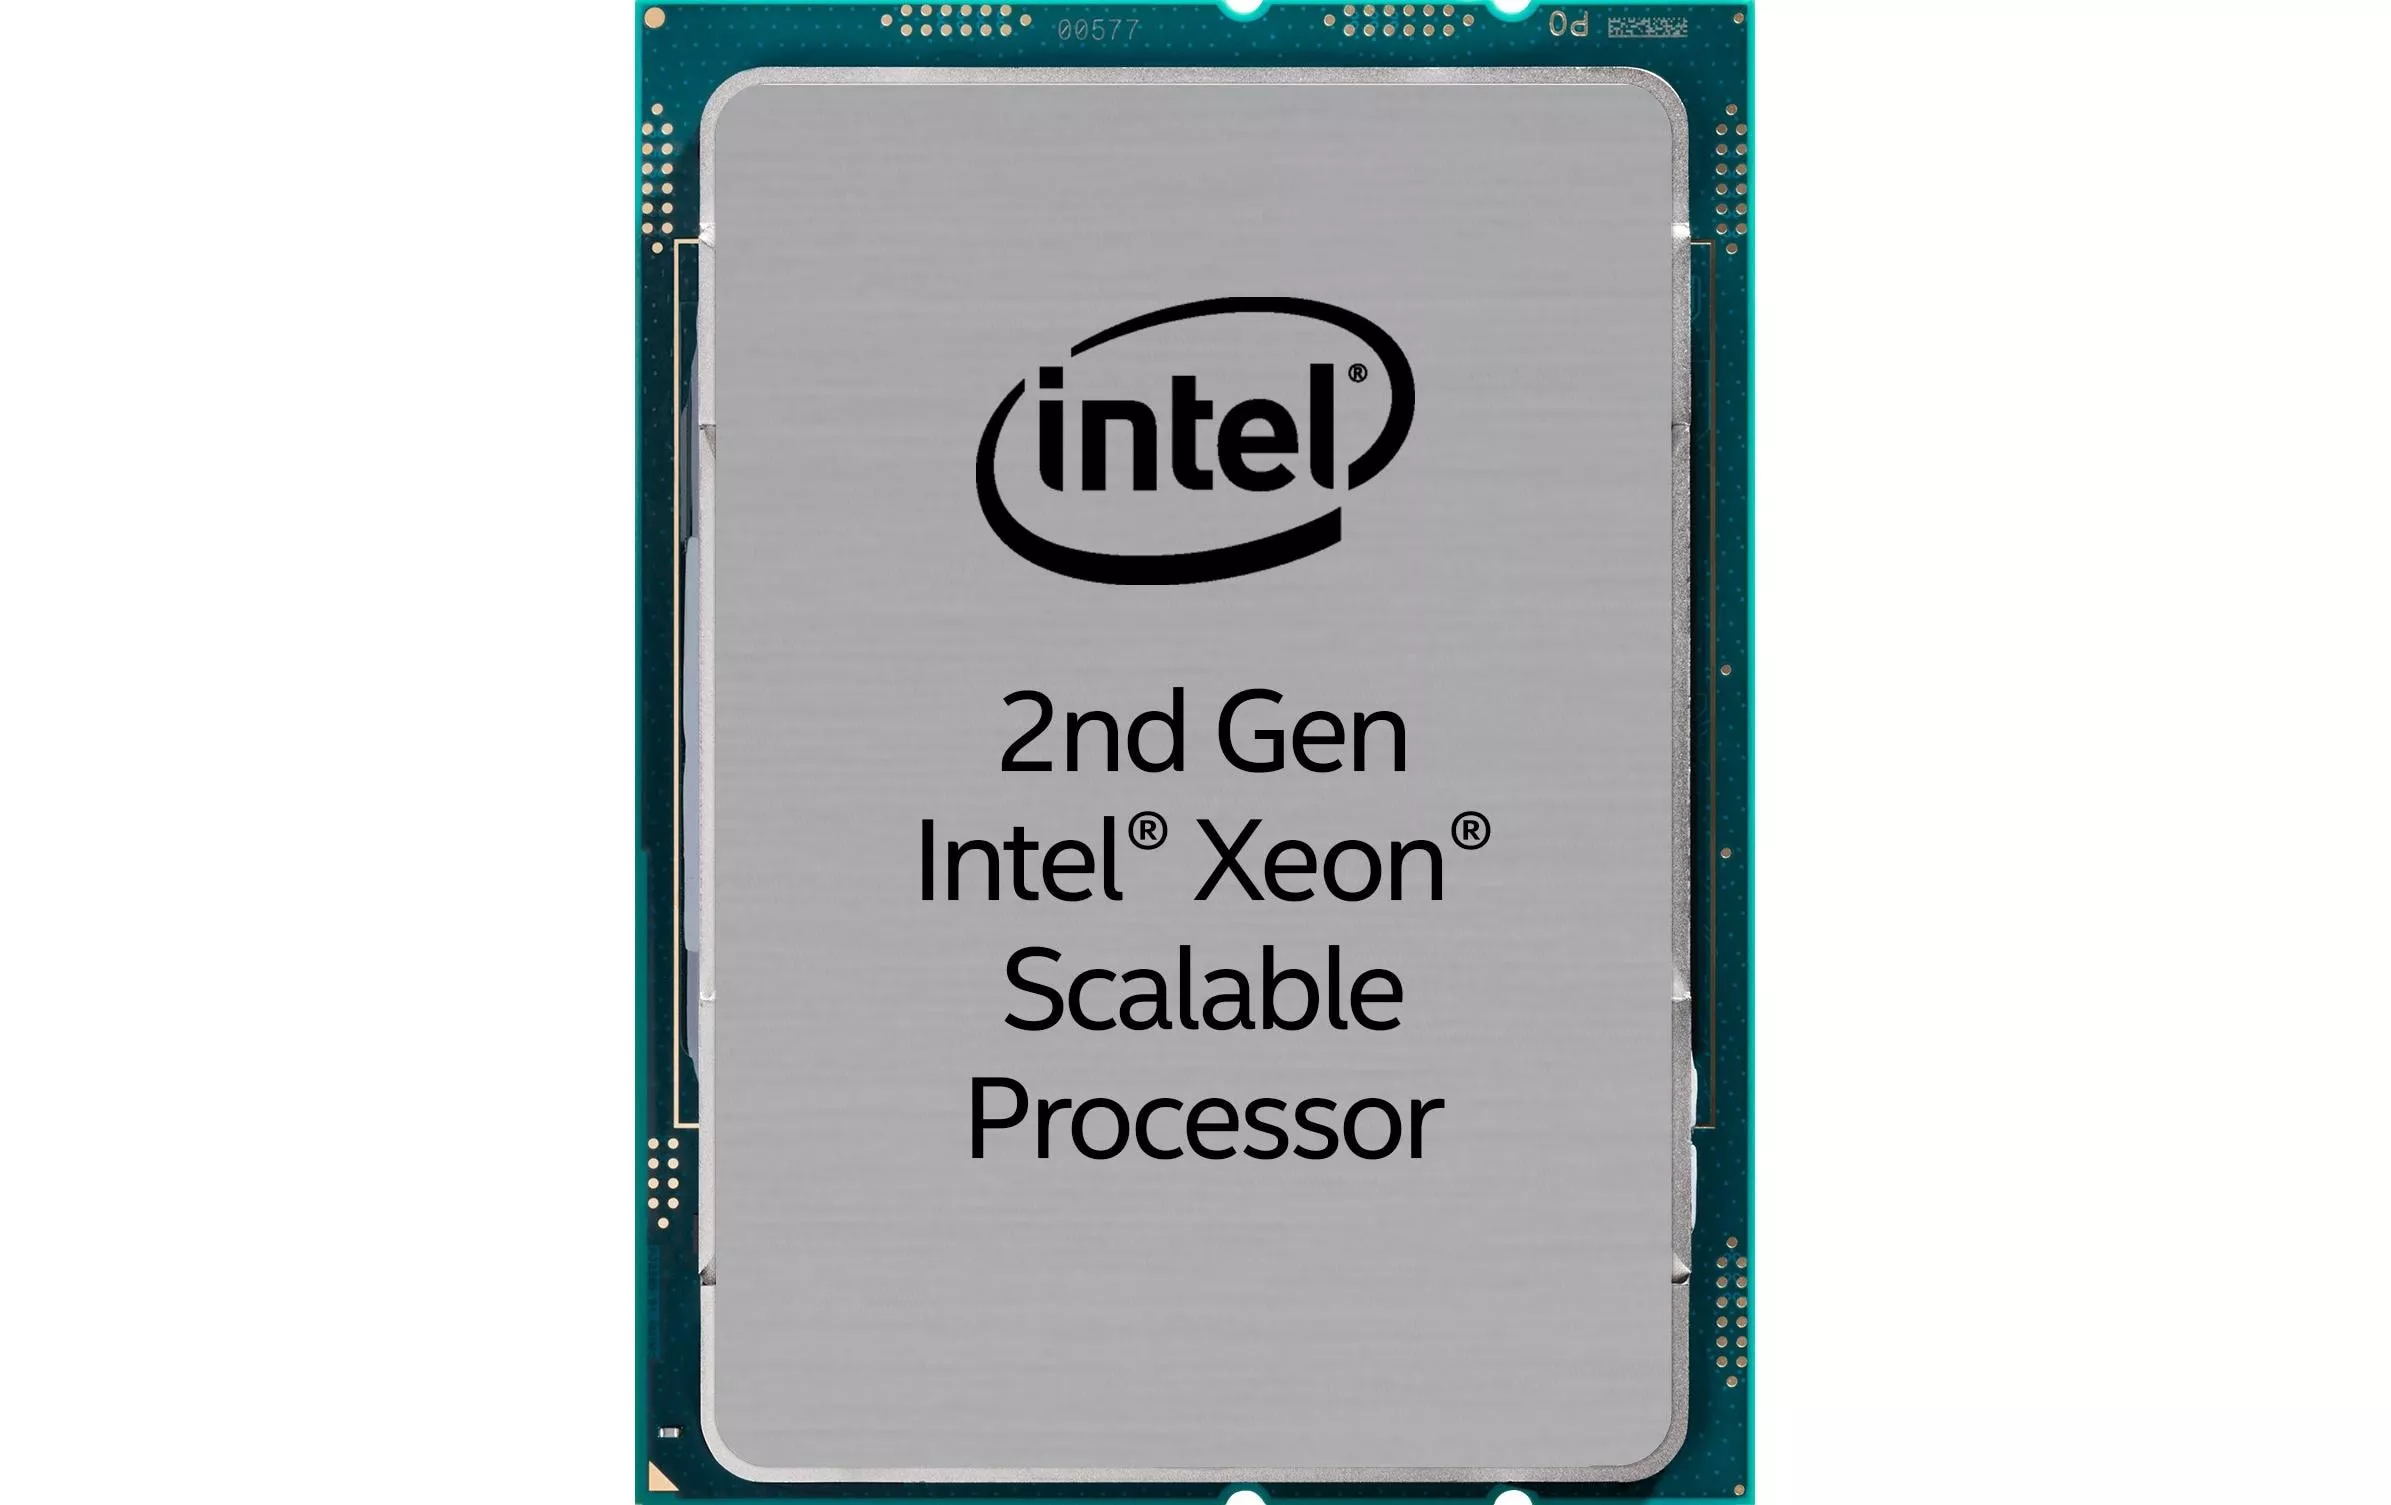 Intel CPU Xeon Silver 4216 2,1 GHz